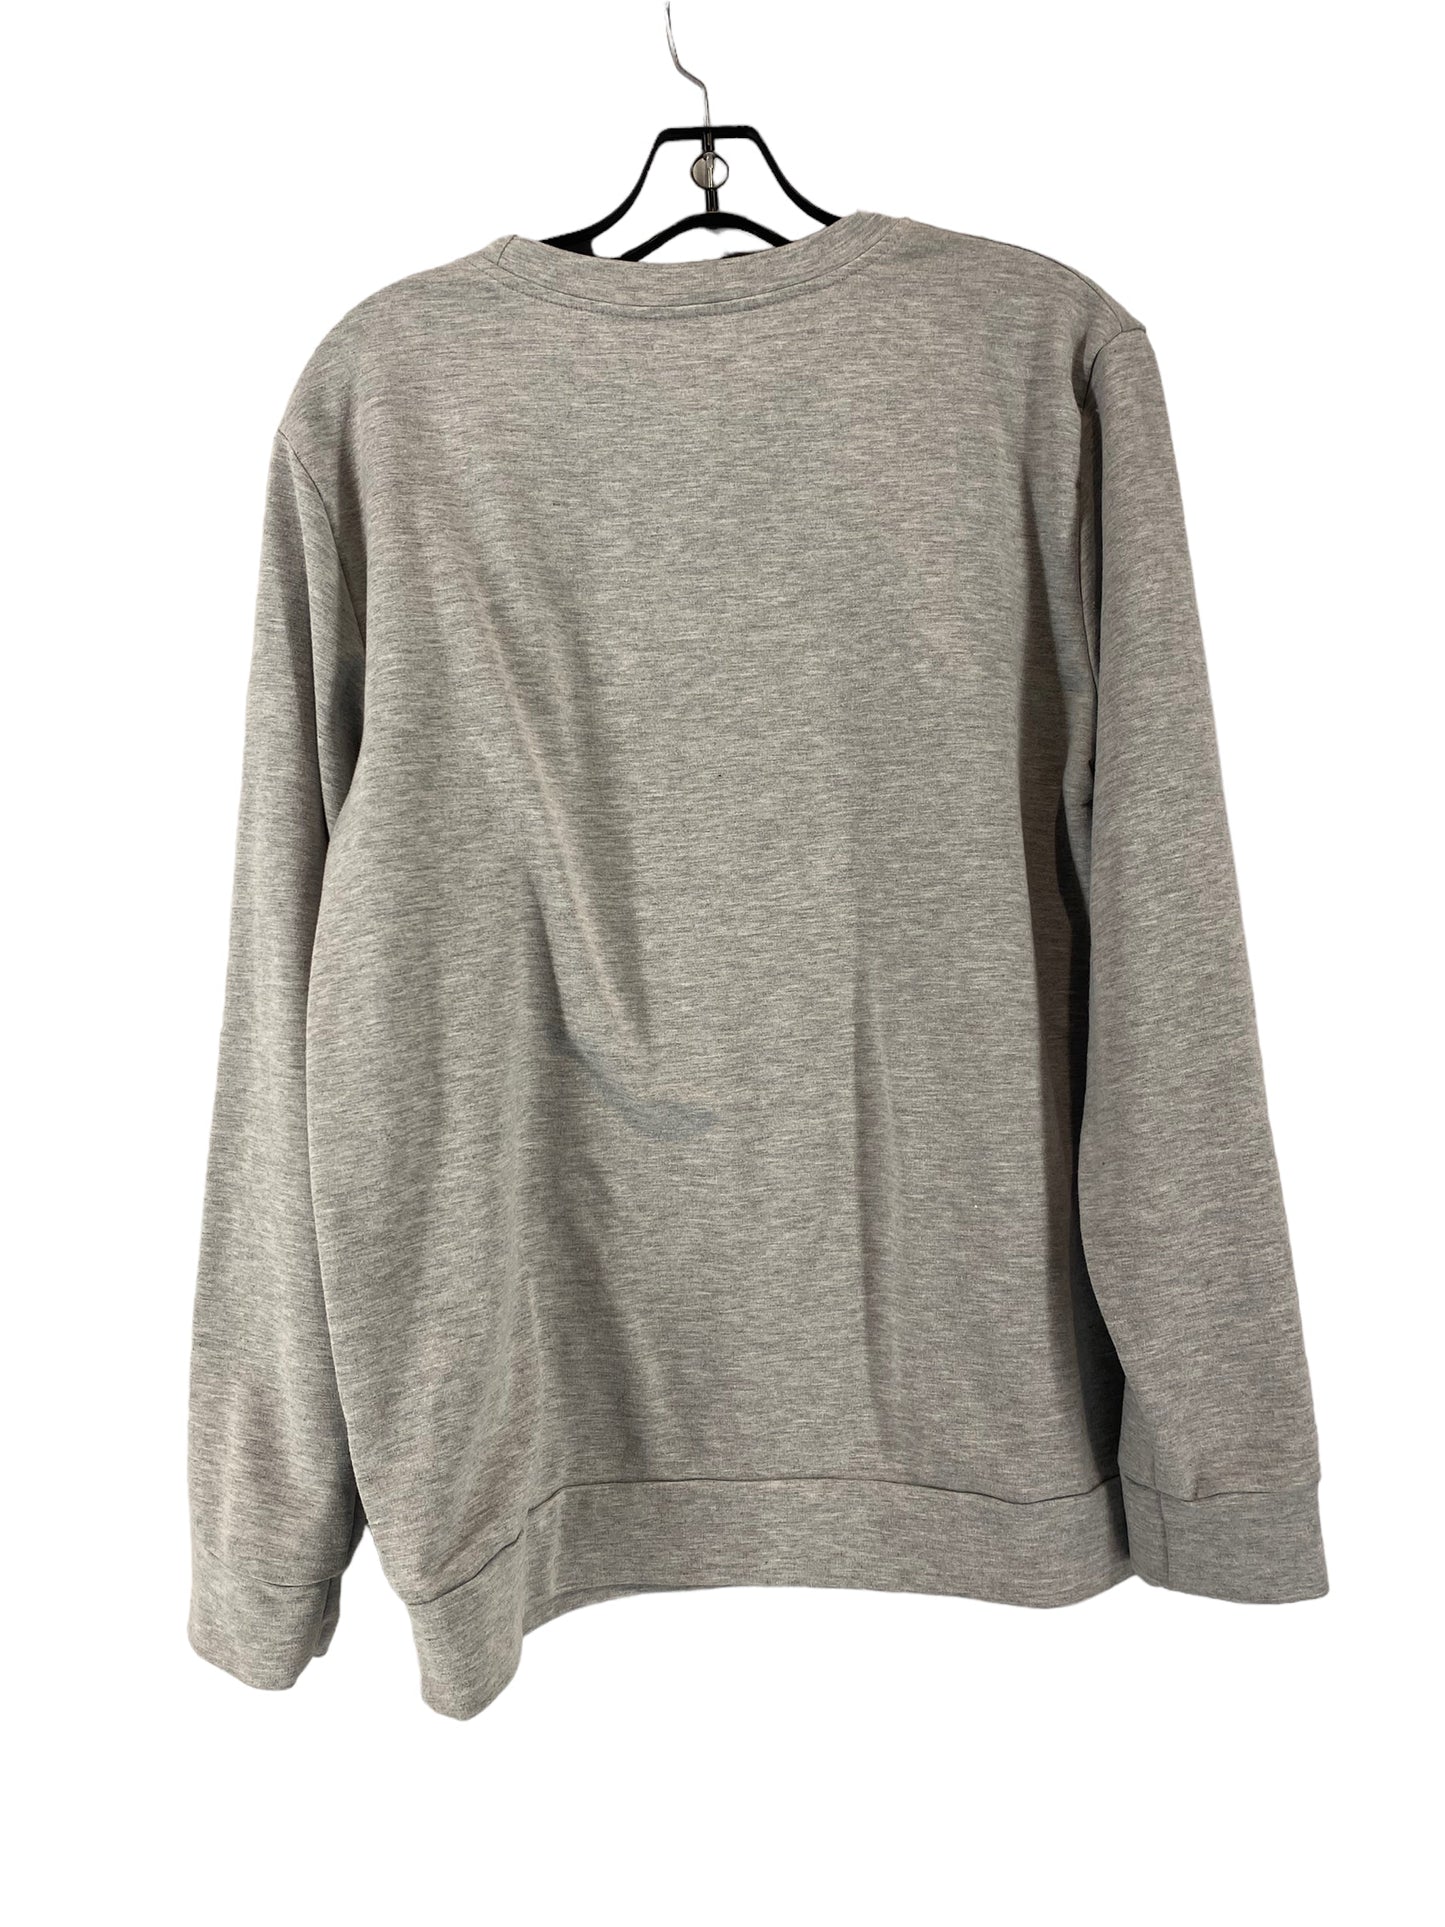 Sweatshirt Crewneck By Clothes Mentor  Size: L